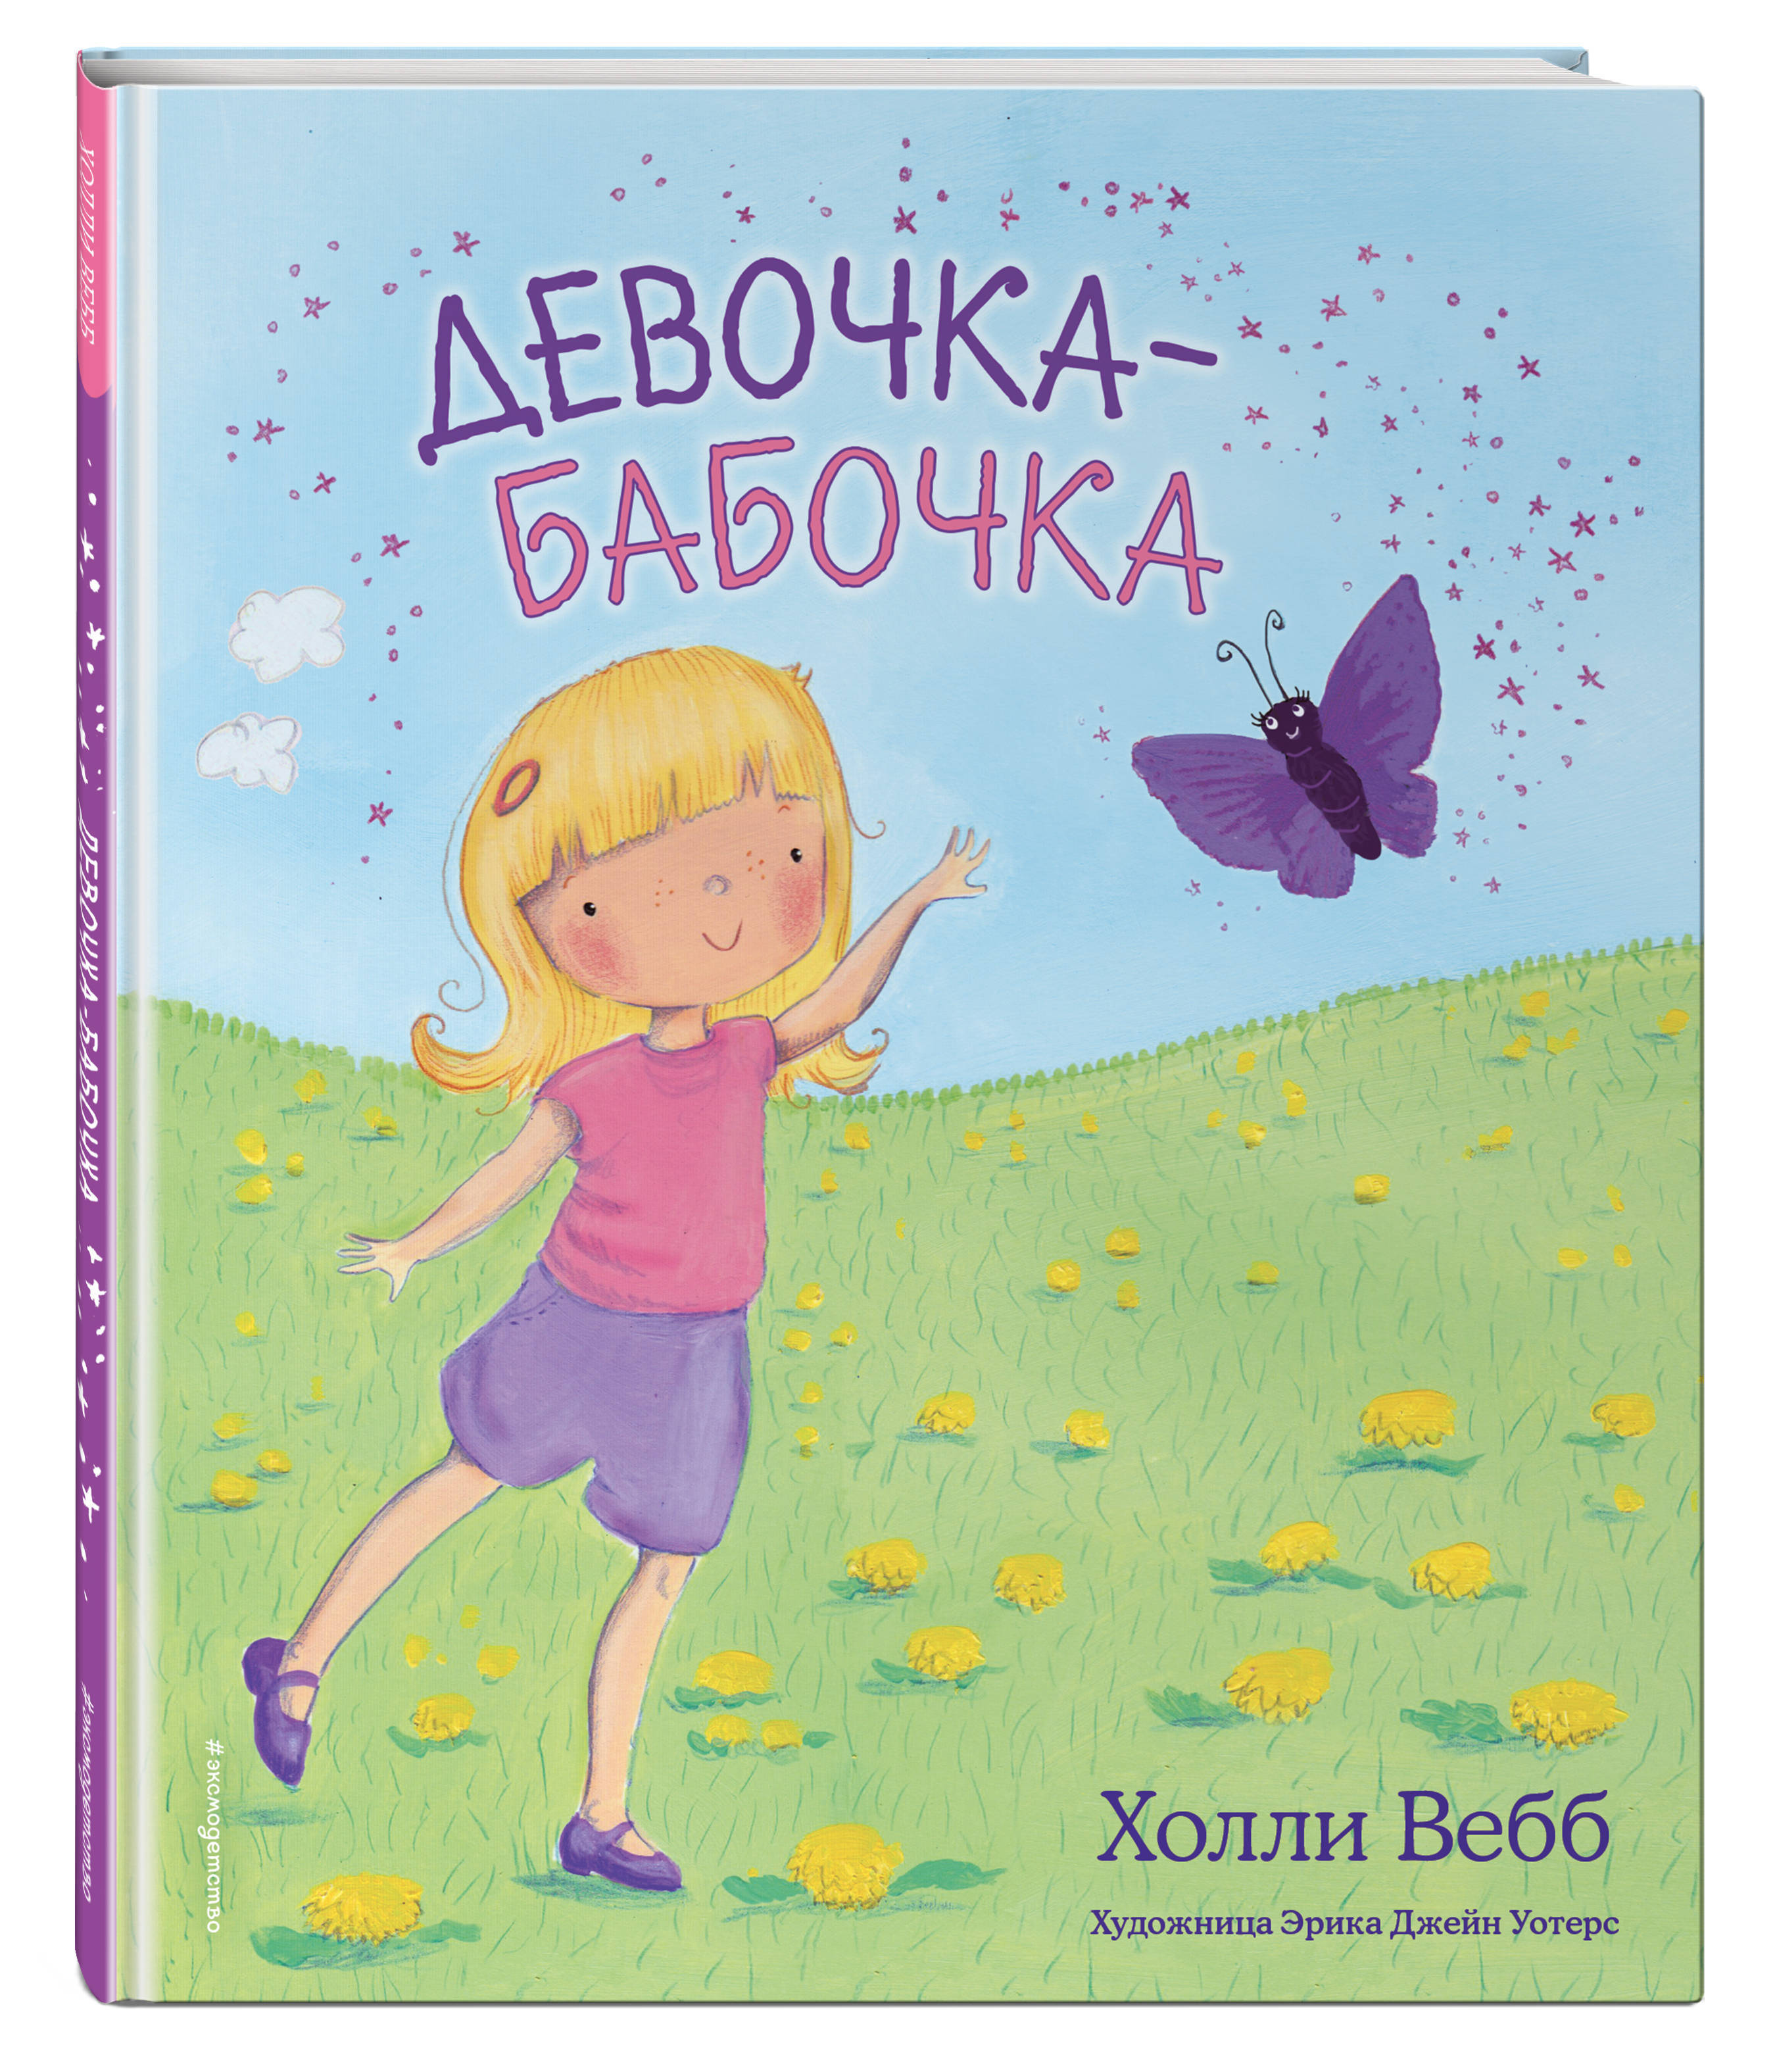 Музыка книга девочек. Холли Вебб "девочка-бабочка". Девочка-бабочка Холли Вебб книга. Холли Вебб про девочку. Девочка с бабочками и книгой.